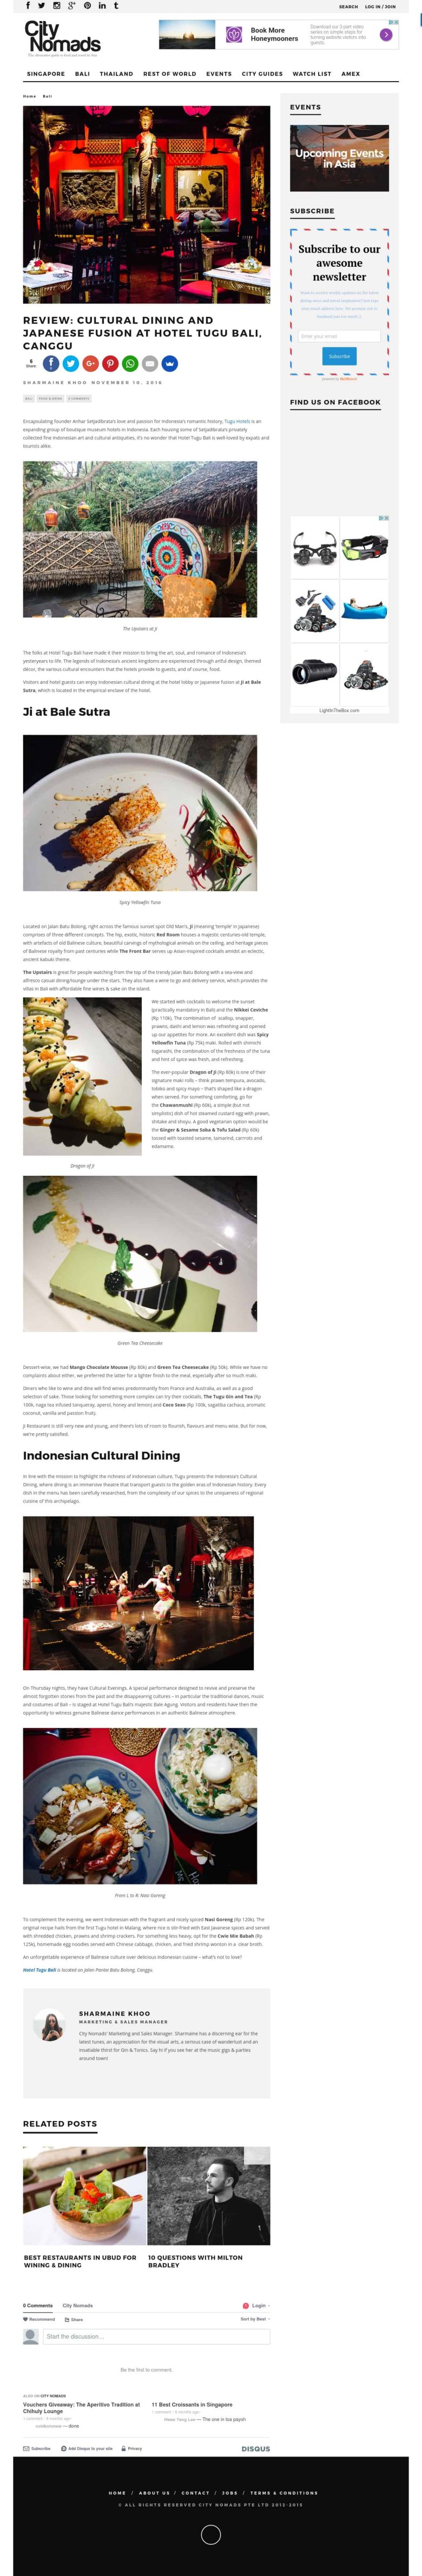 Review: Cultural Dining and Japanese Fusion at Hotel Tugu Bali, Canggu - www.citynomads.com